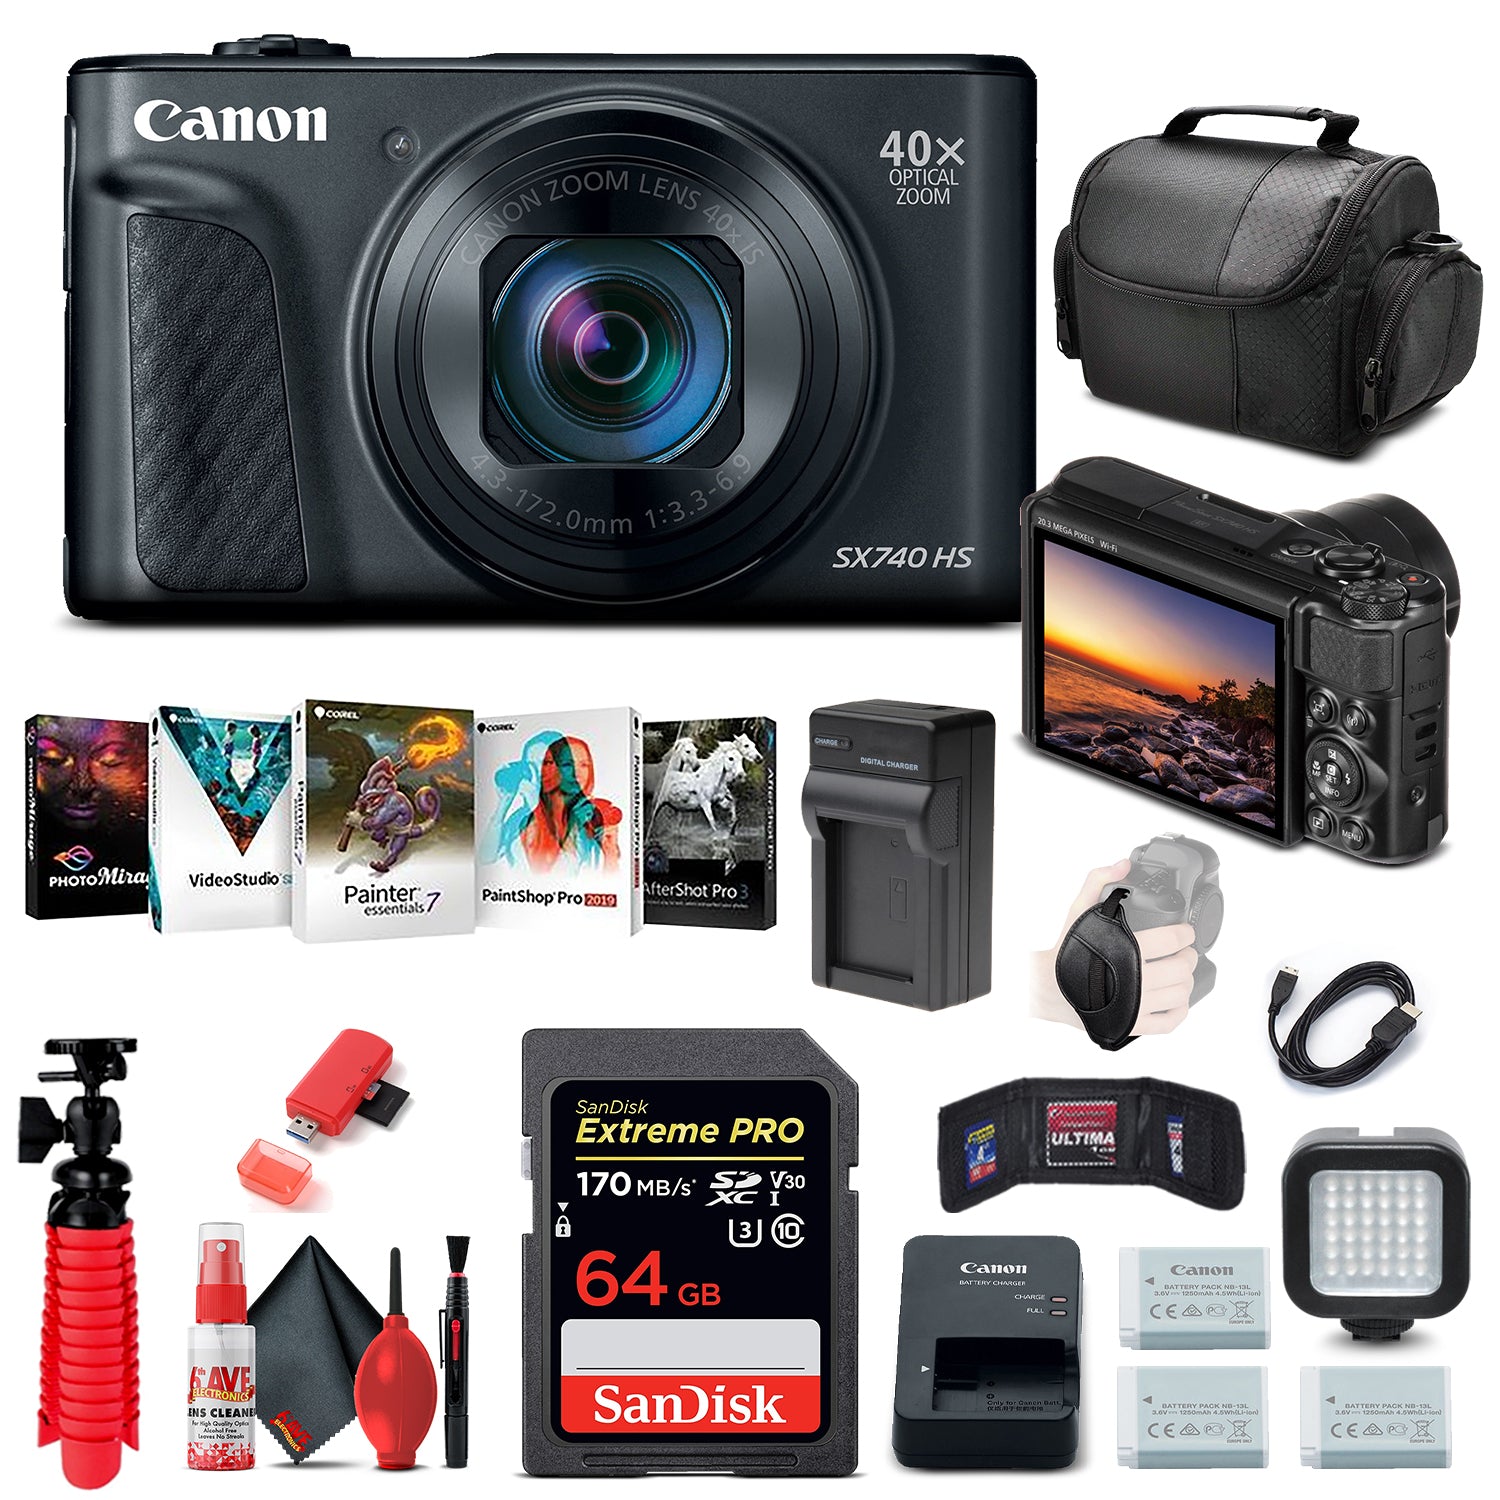 Canon PowerShot SX740 HS Digital Camera (Black) (2955C001) + 64GB Card Pro Bundle